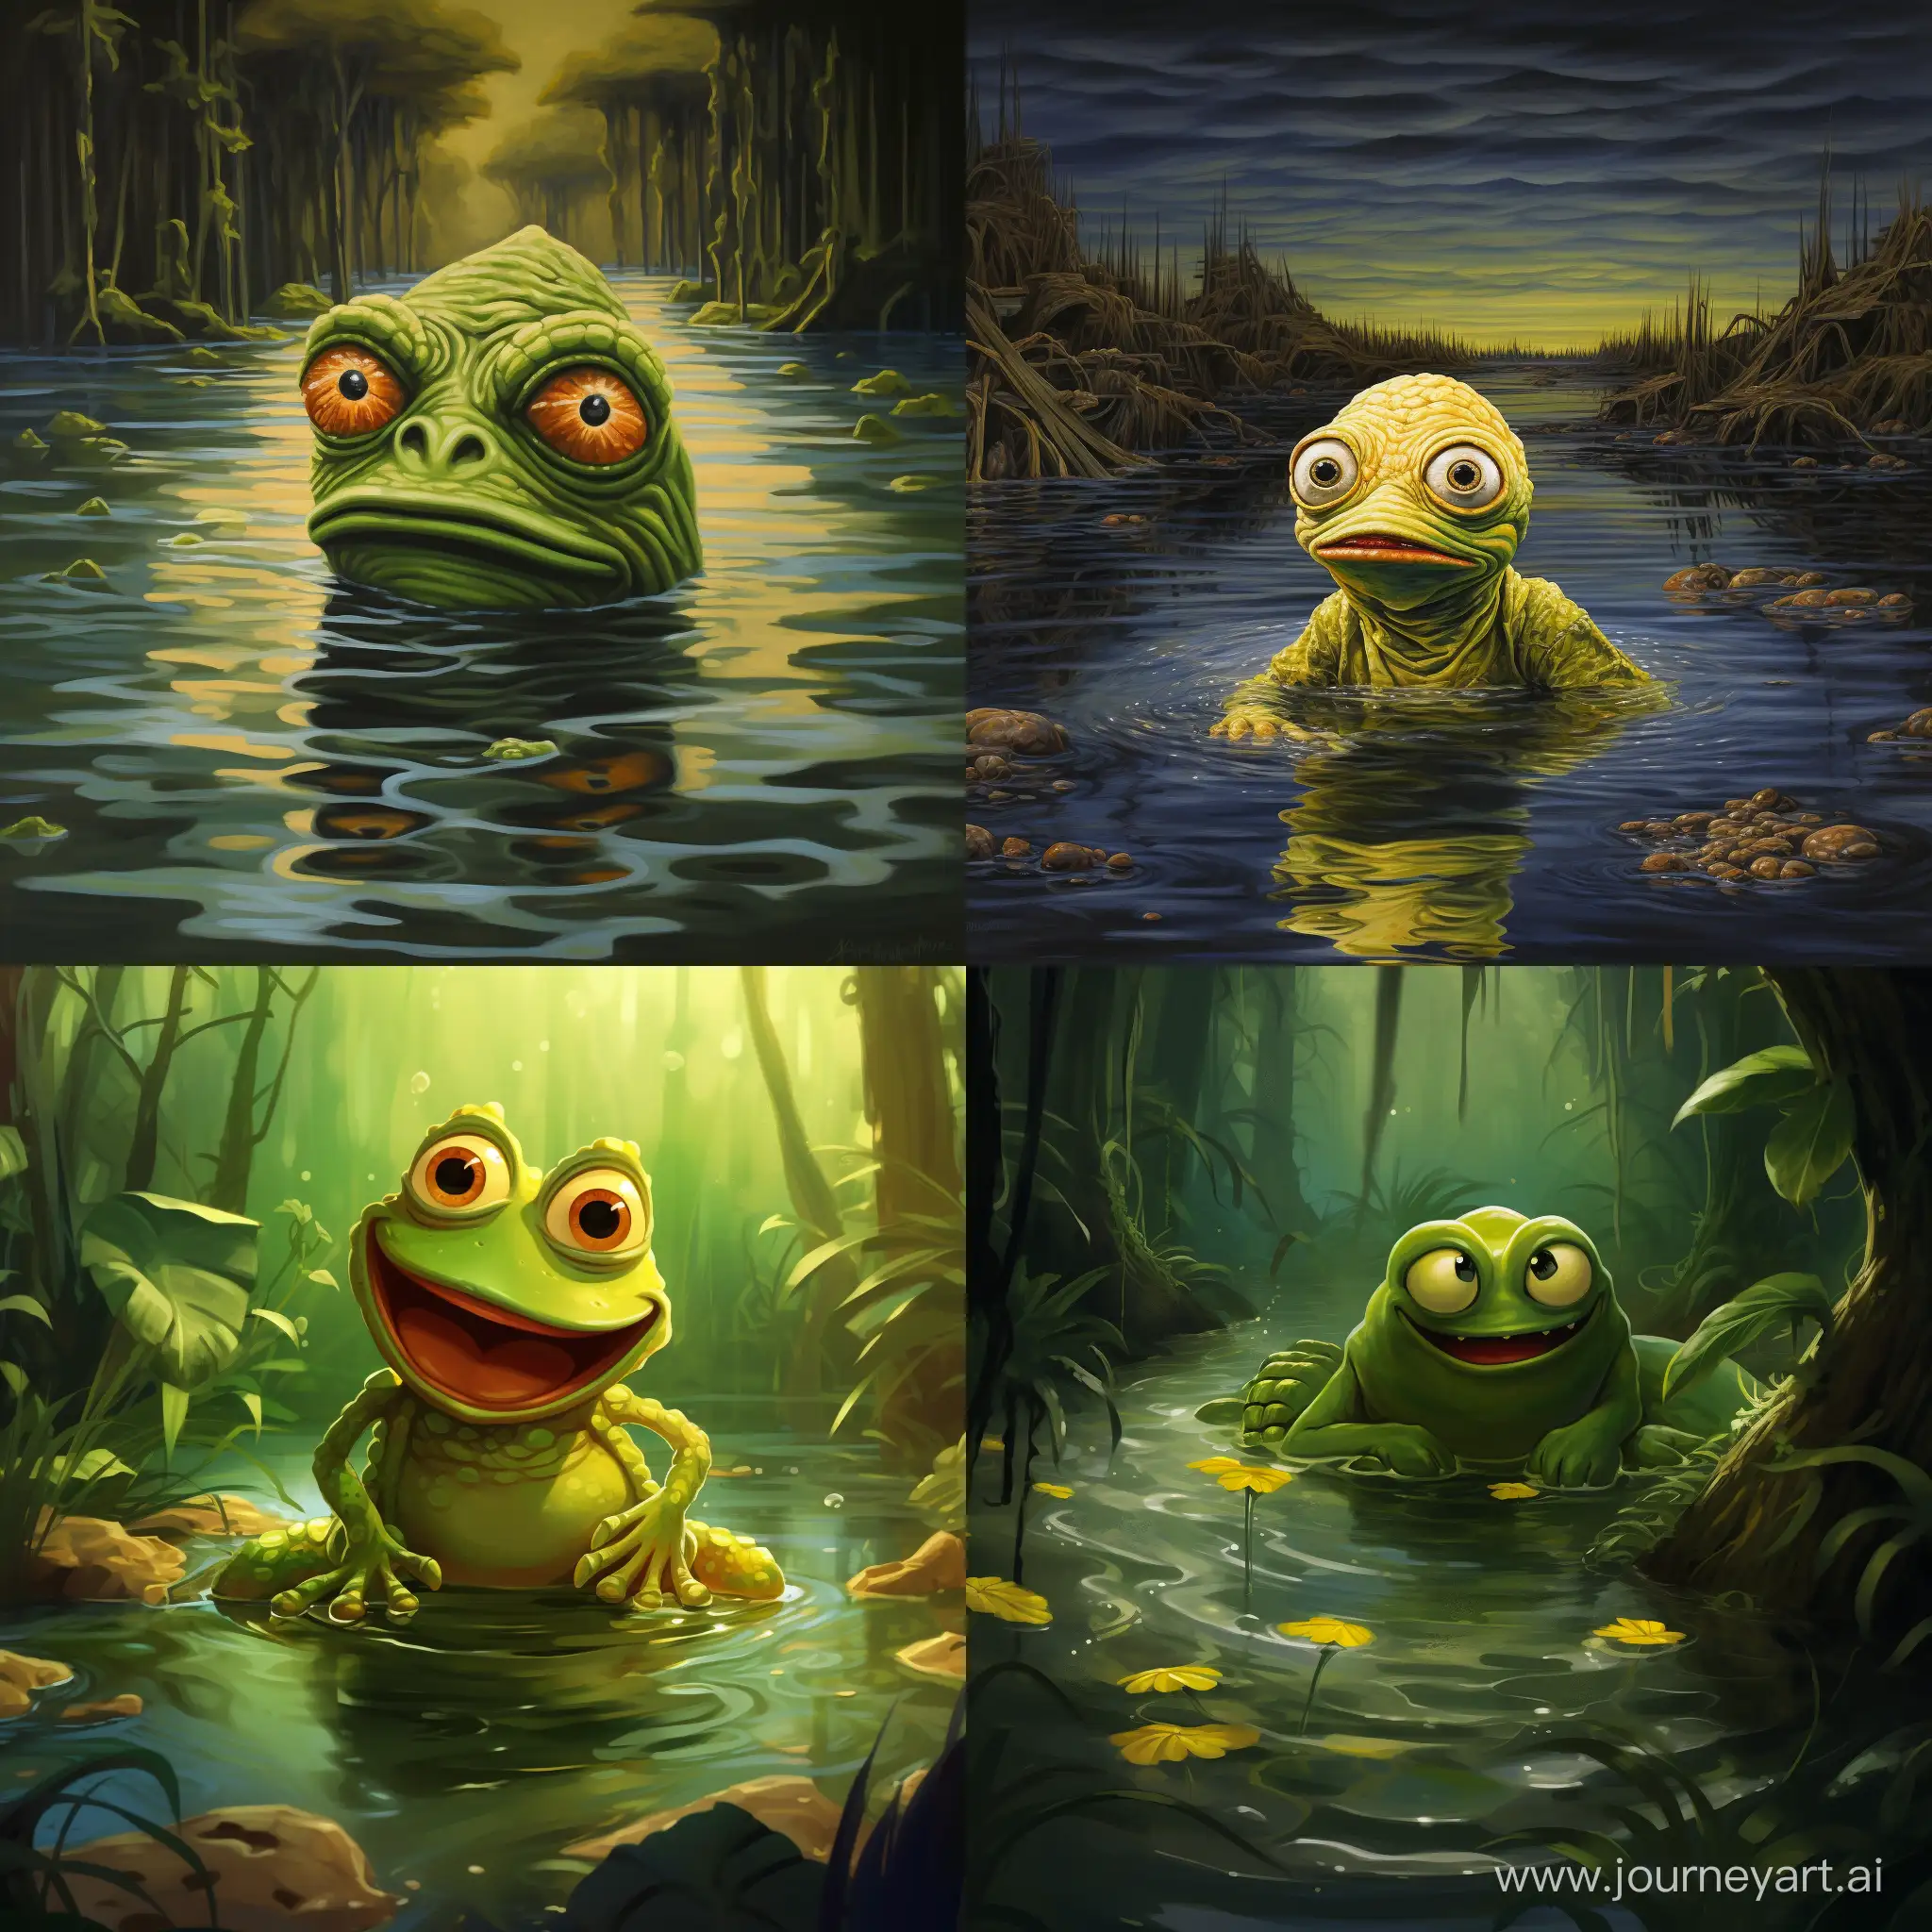 Playful-Pepe-Enjoying-Pond-Serenity